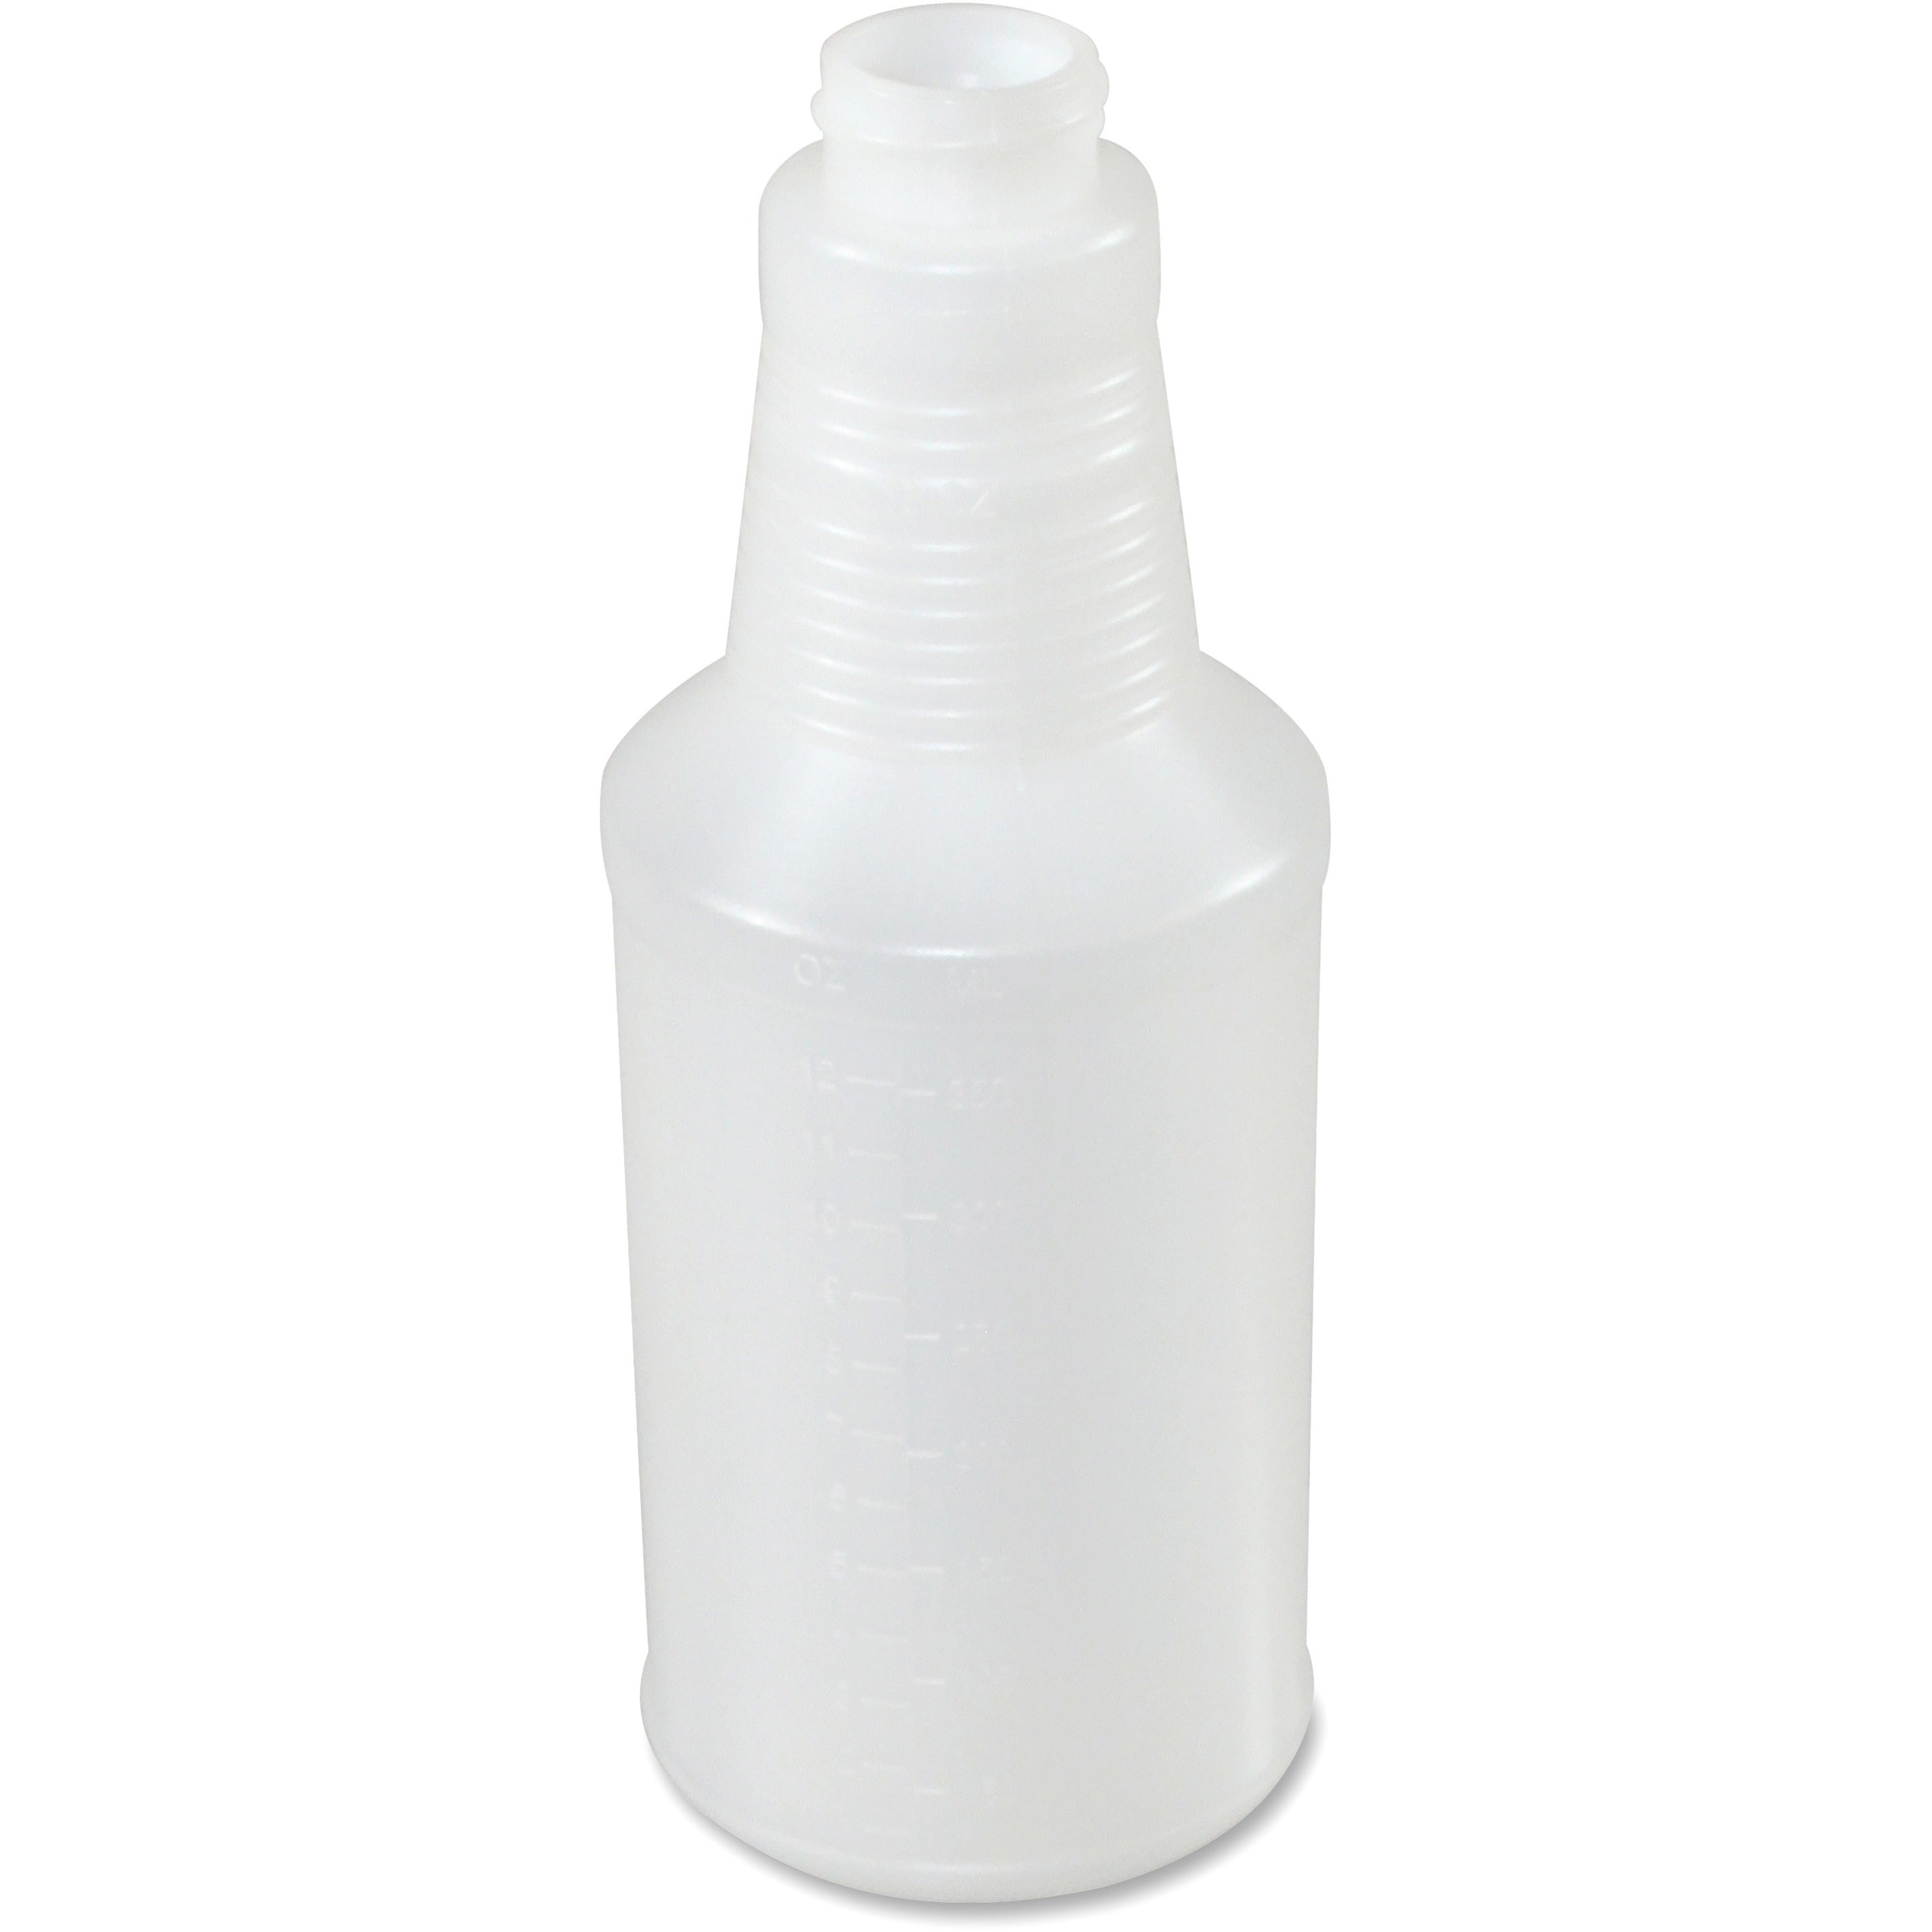 Genuine Joe 24 oz. Plastic Bottle with Graduations - Suitable For Cleaning - 24 / Carton - Translucent - 